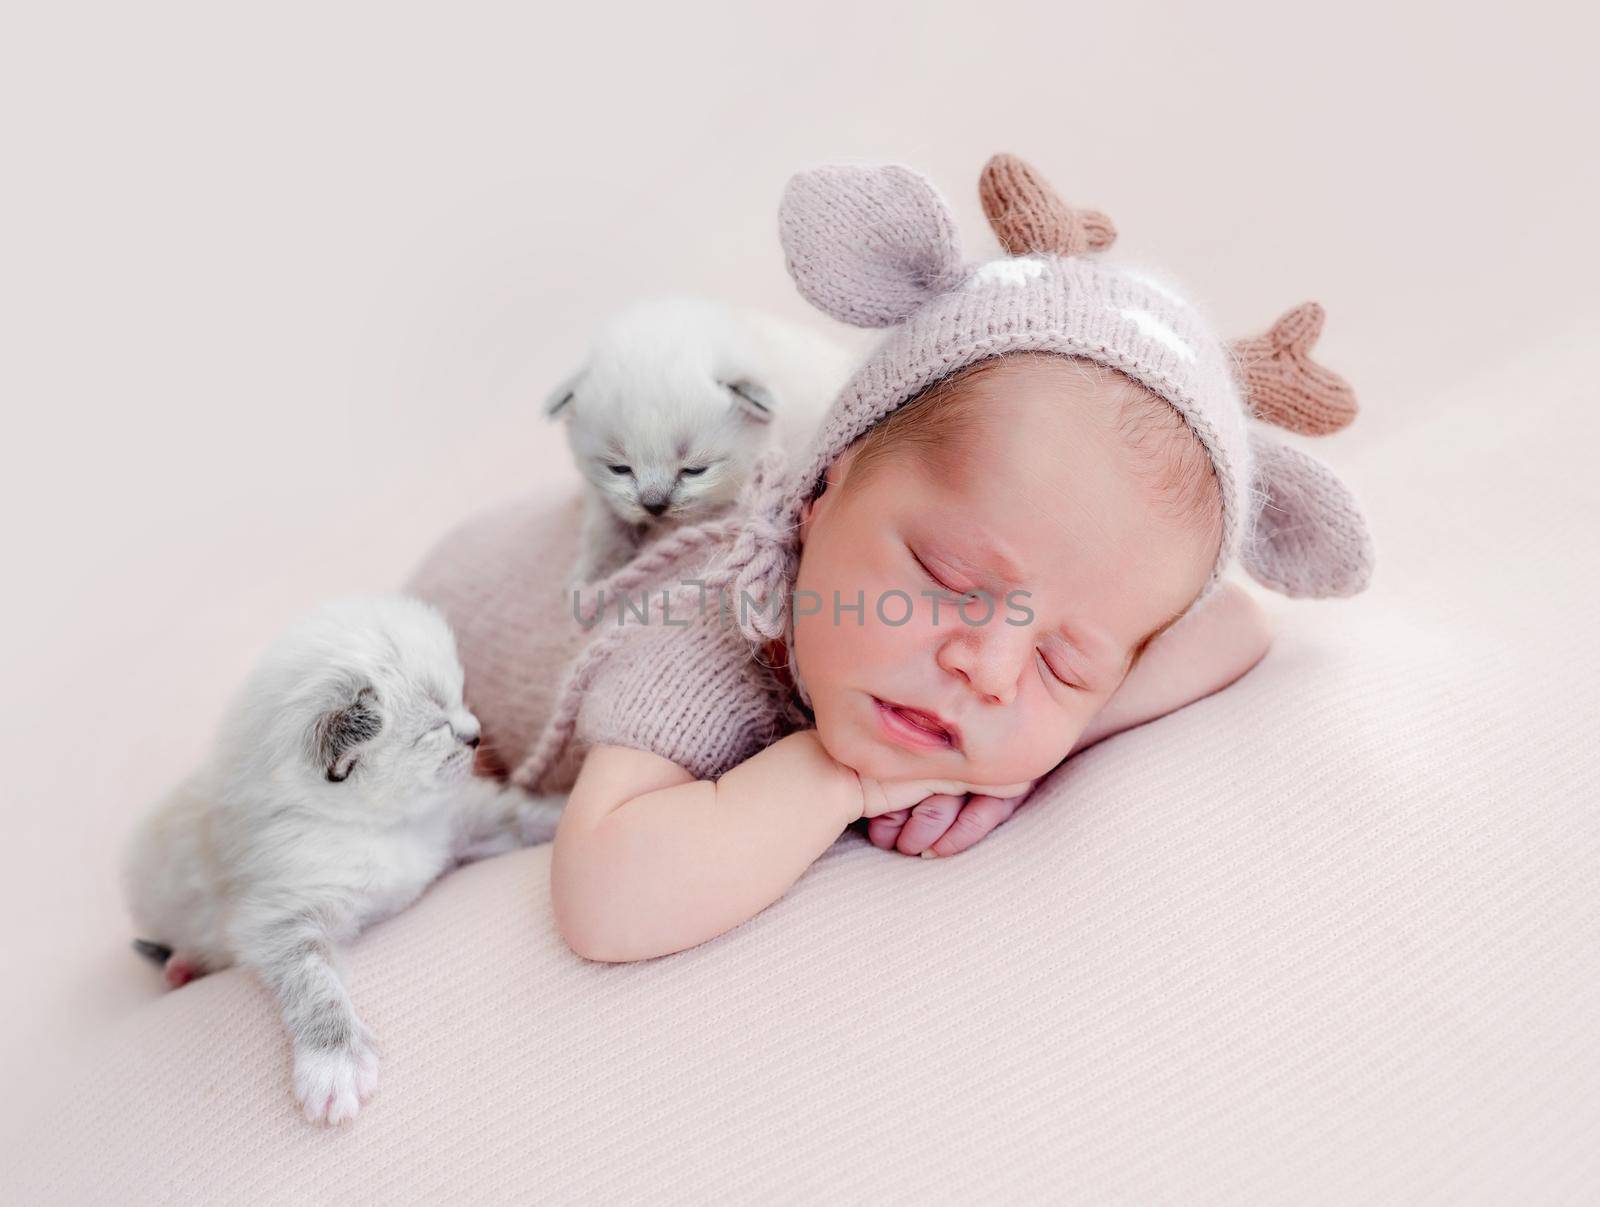 Newborn sleeping with kittens by tan4ikk1